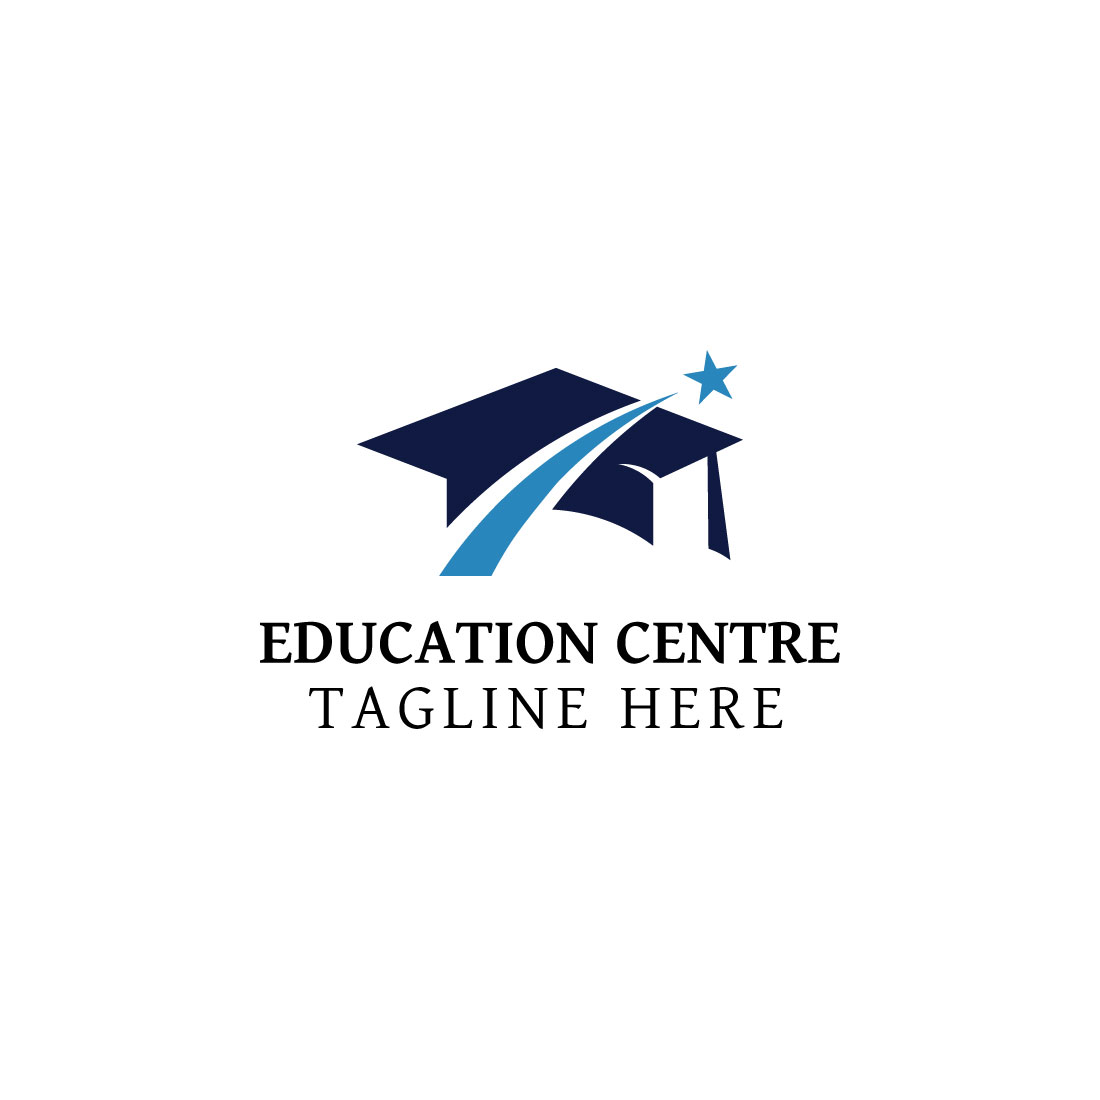 Education Centre logo design preview image.